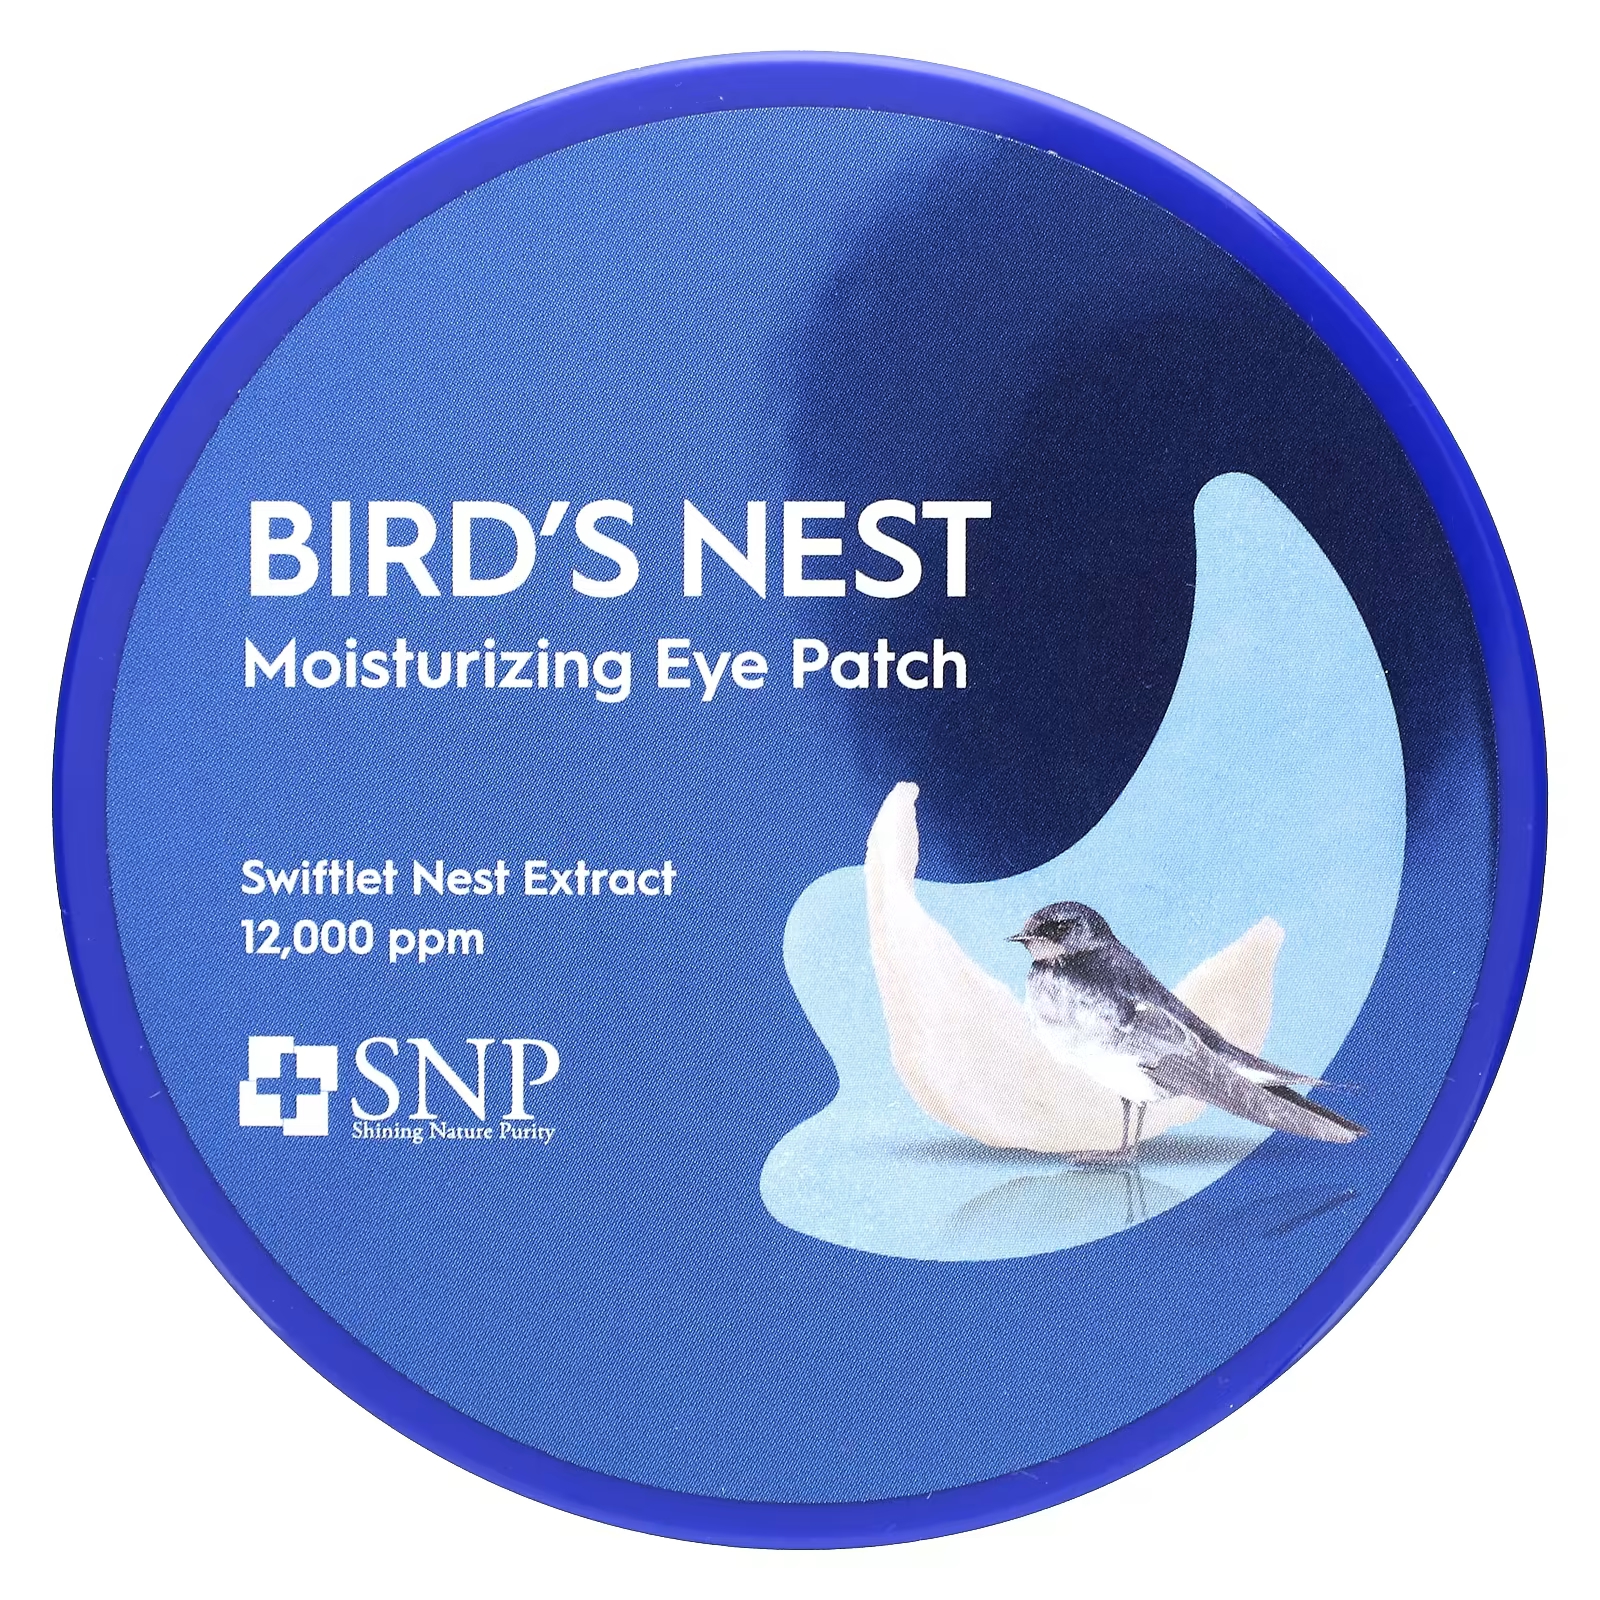 SNP Bird's Nest Увлажняющие патчи для глаз, 60 патчей по 0,04 унции (1,25 г) каждый acrylic ant nest test tube nest plane nest pet workshop castle reptile terrarium